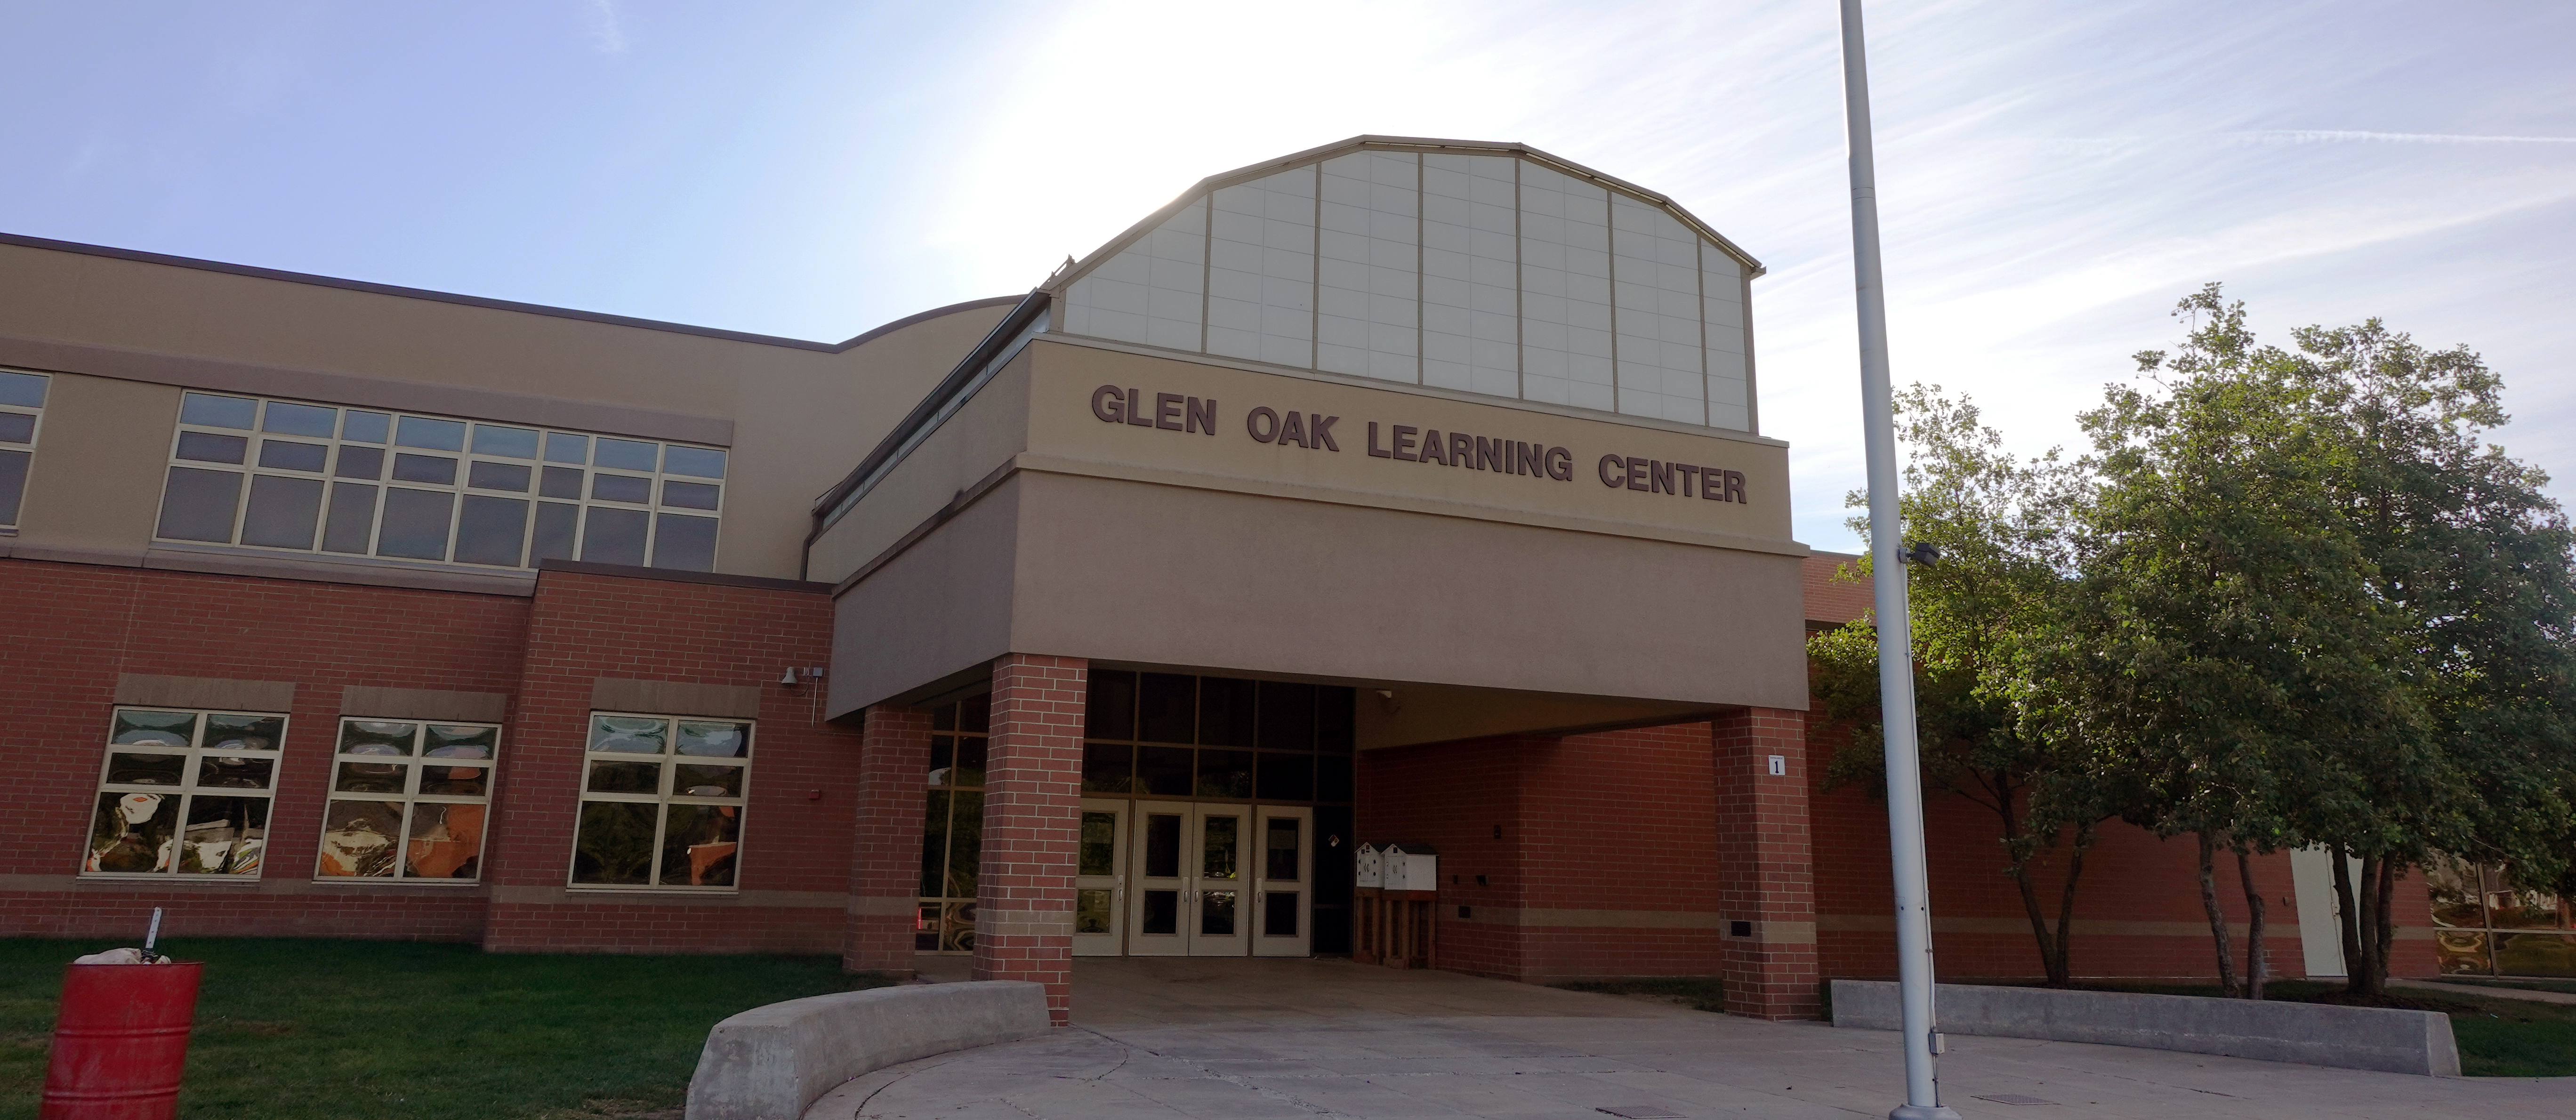 front of glen oak school building